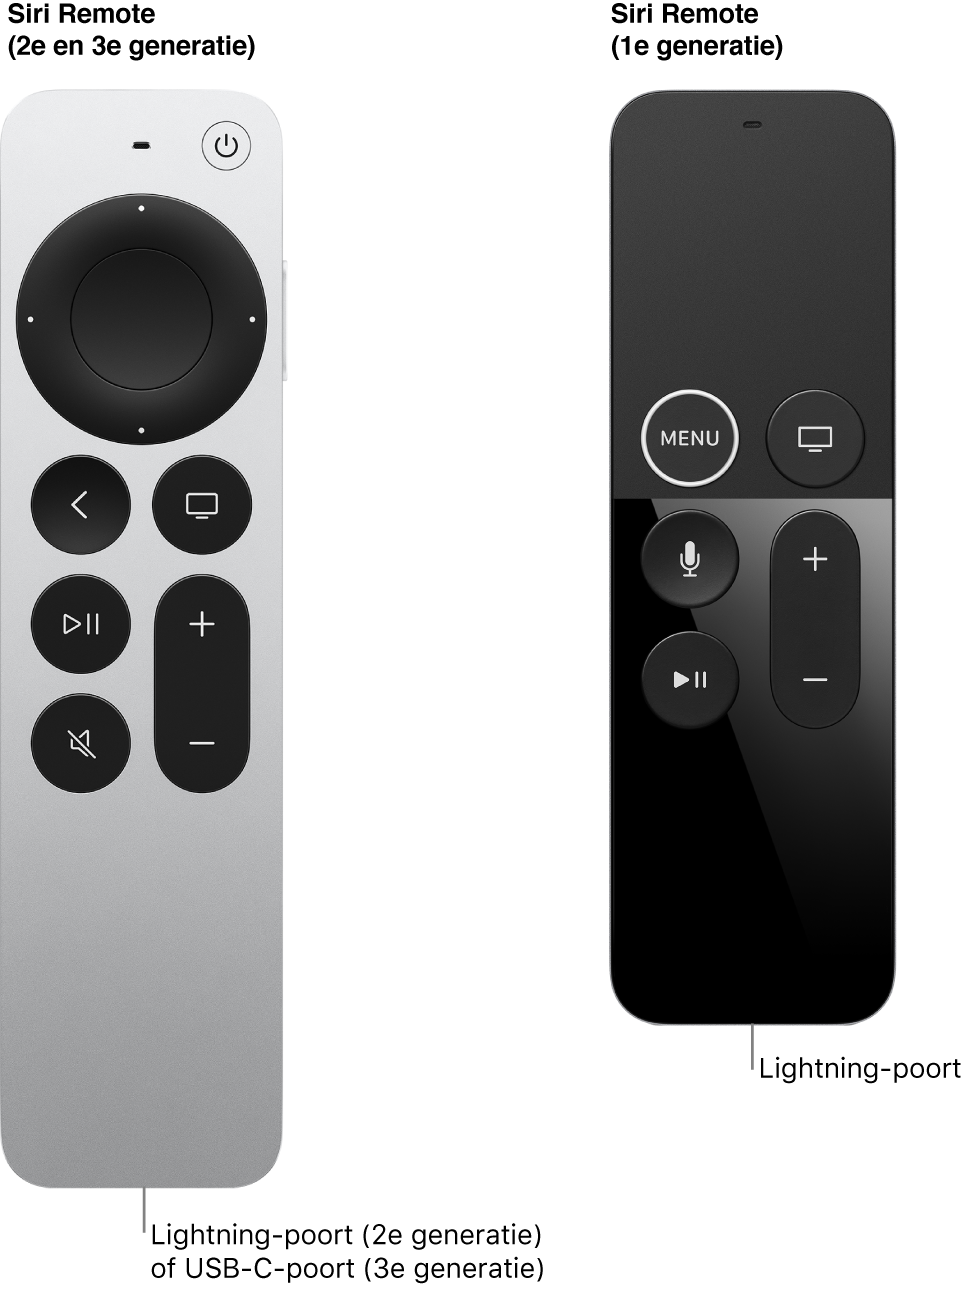 Een afbeelding van de Siri Remote (2e en 3e generatie) en Siri Remote (1e generatie) met de connectorpoort